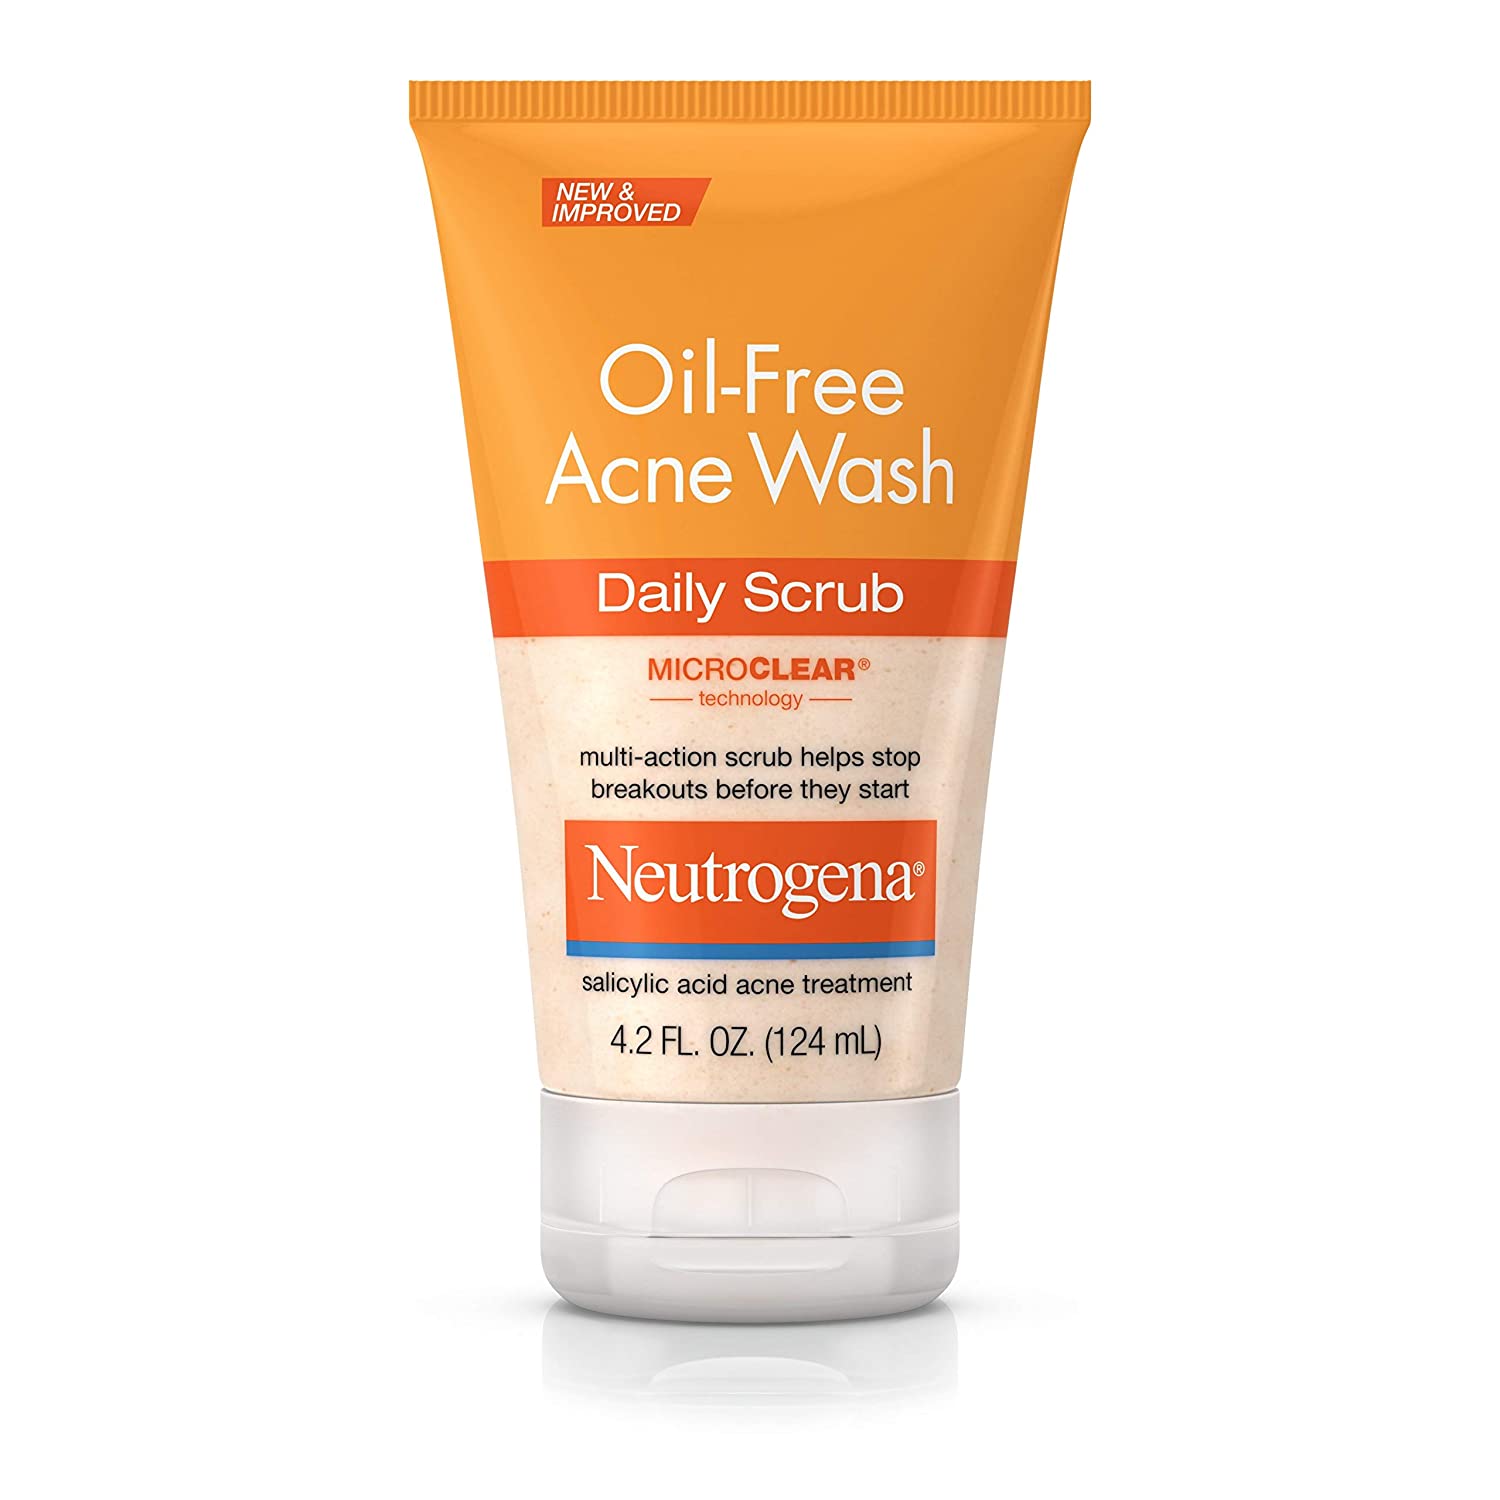 Neutrogena Oil-Free Acne Face Scrub with Salicylic Acid Acne Treatment Medicine, $5.69 (REG $10.00)